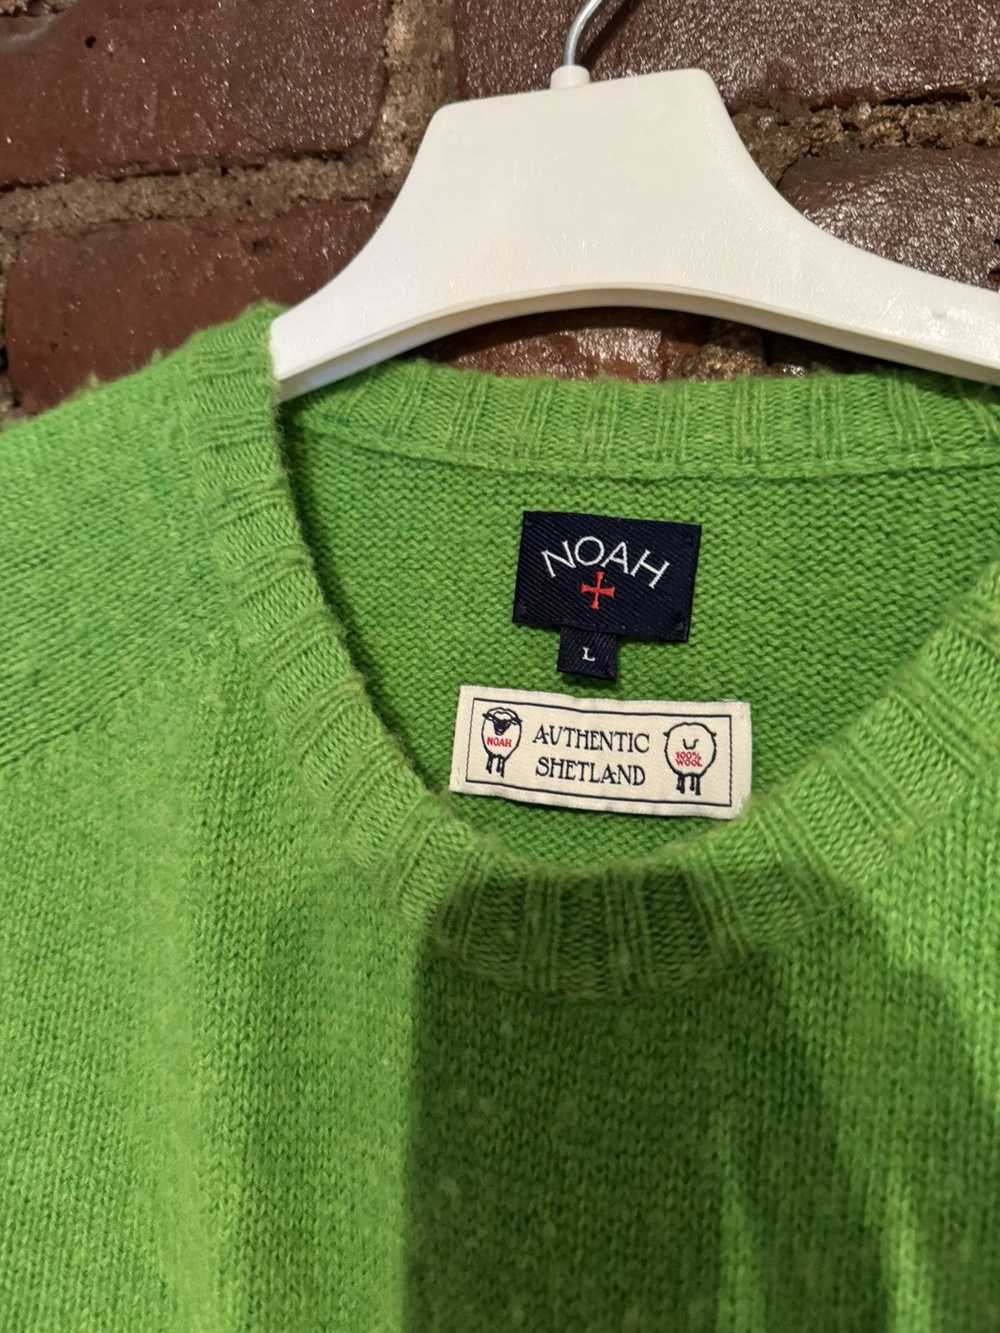 Noah Noah NY Green Shetland Sweater - image 3